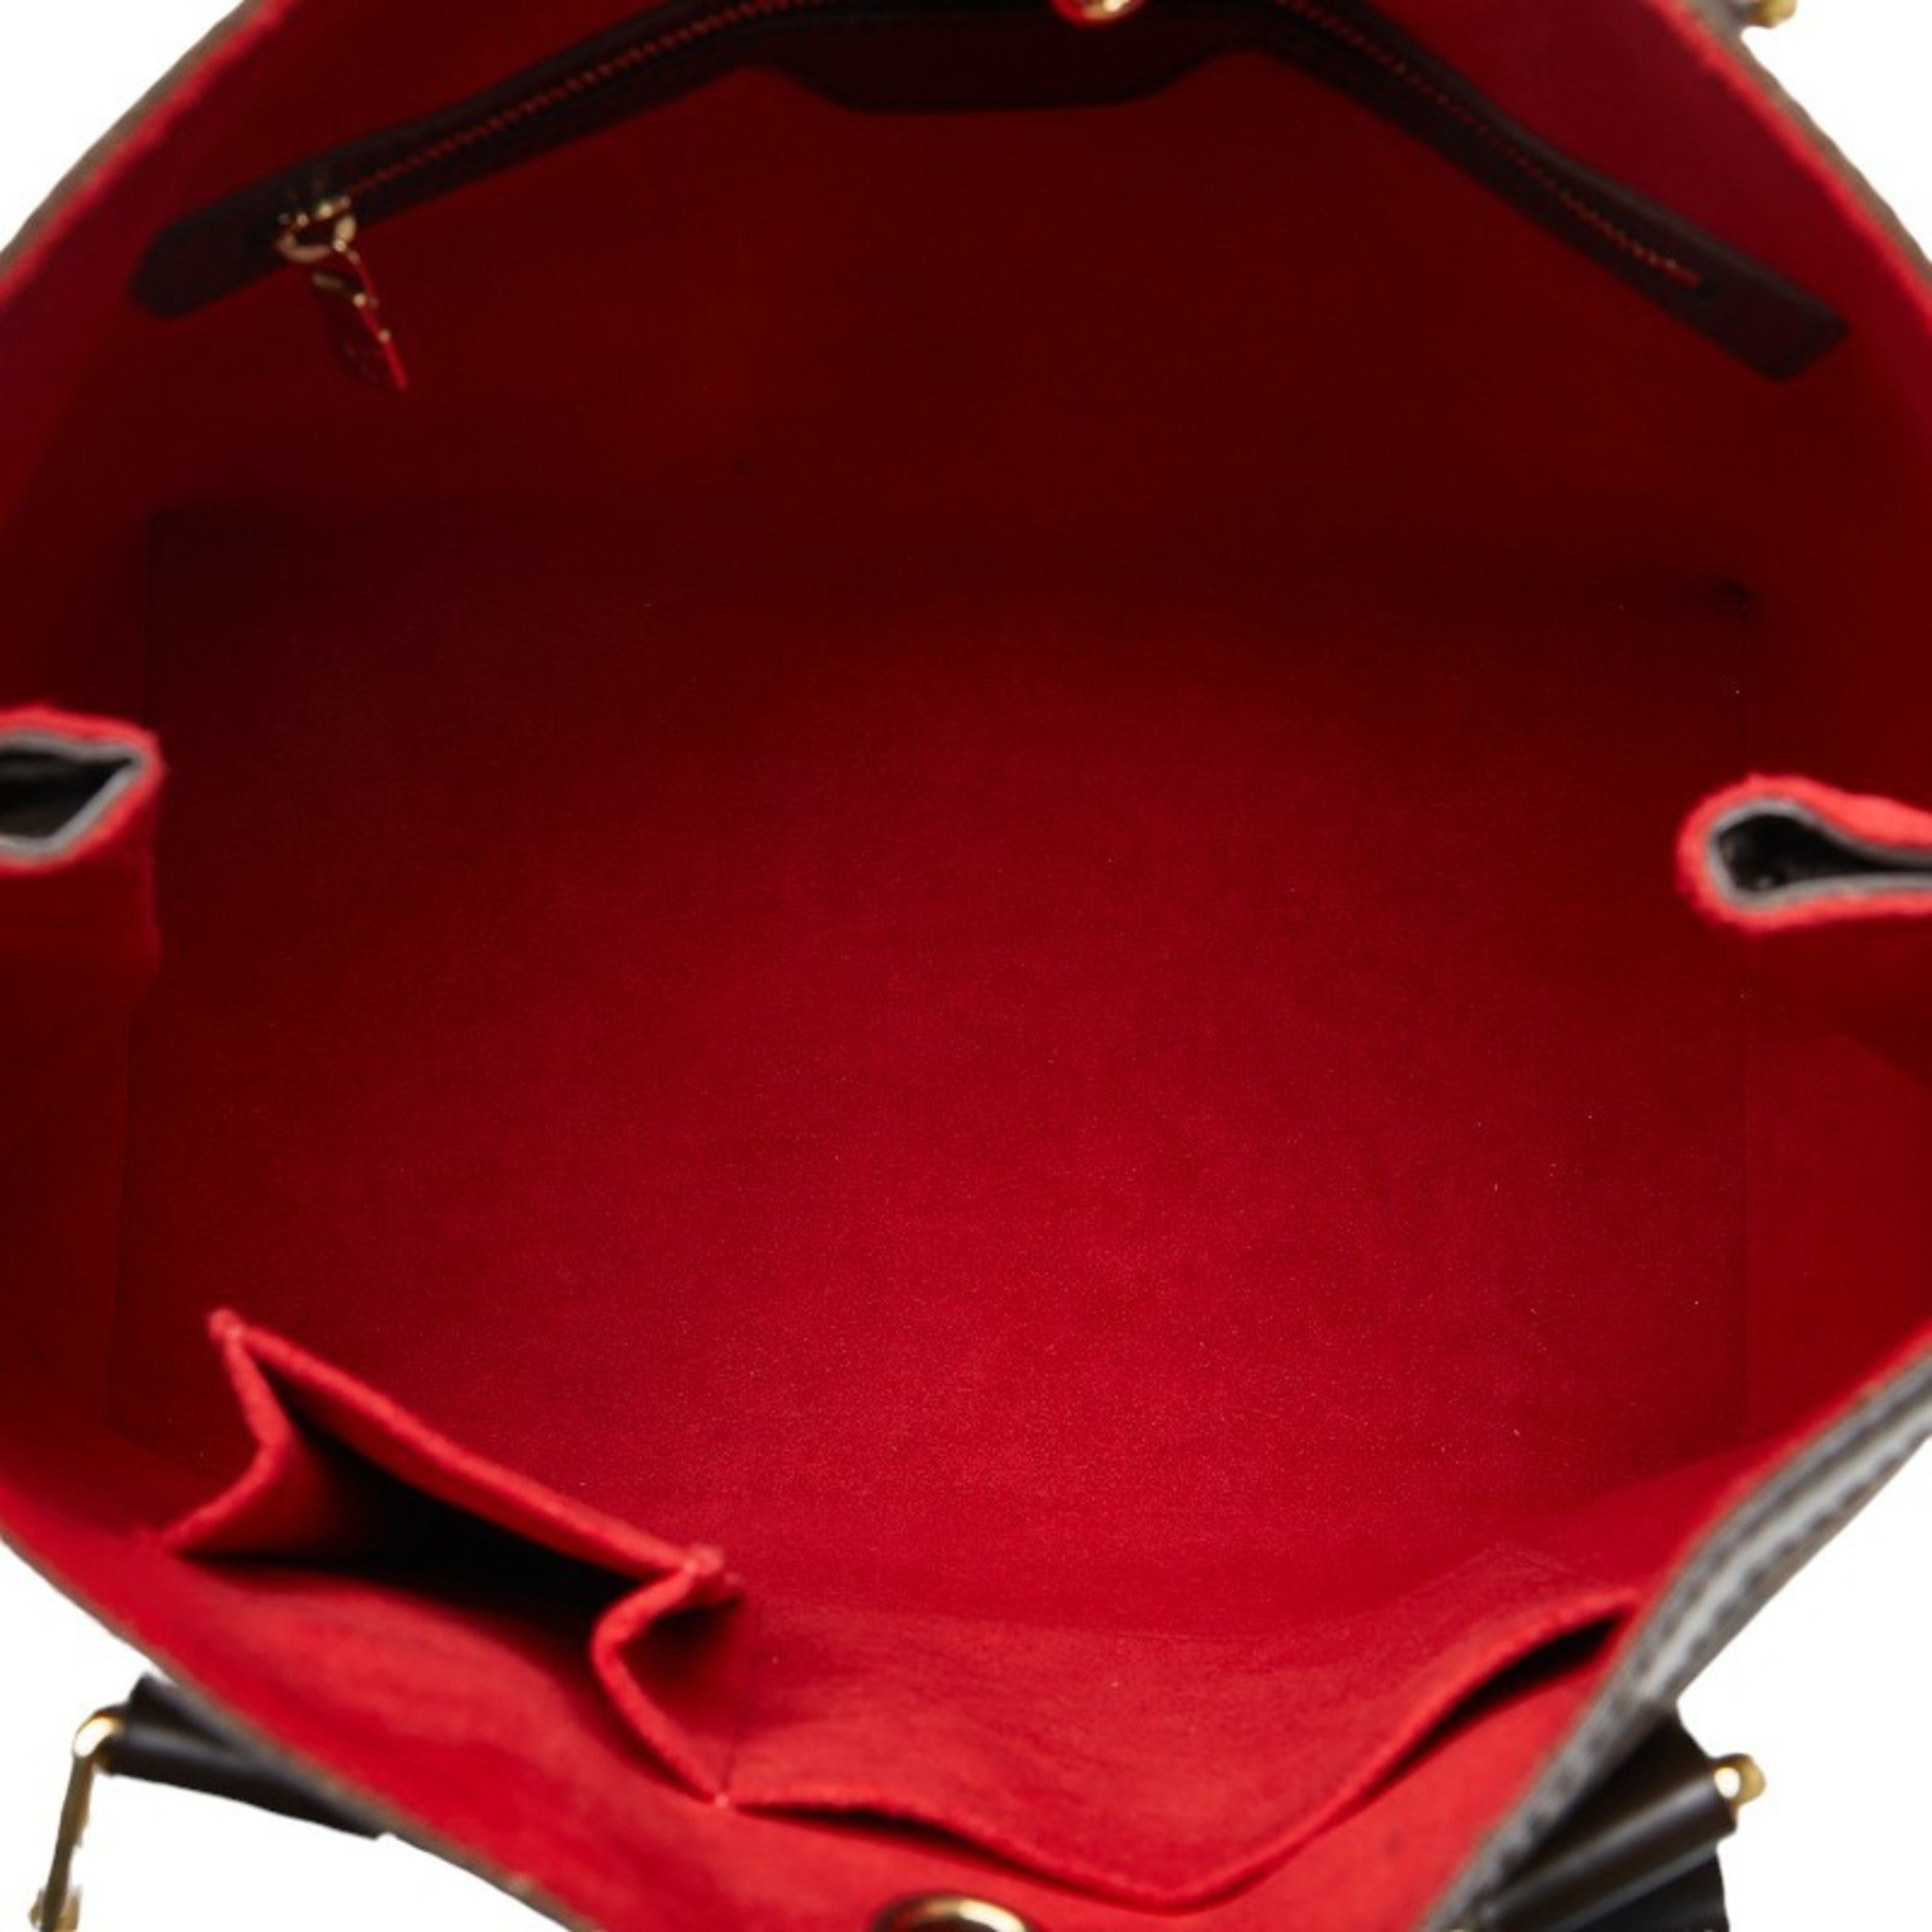 Louis Vuitton Damier Hampstead PM Handbag Tote Bag N51205 Brown PVC Leather Women's LOUIS VUITTON